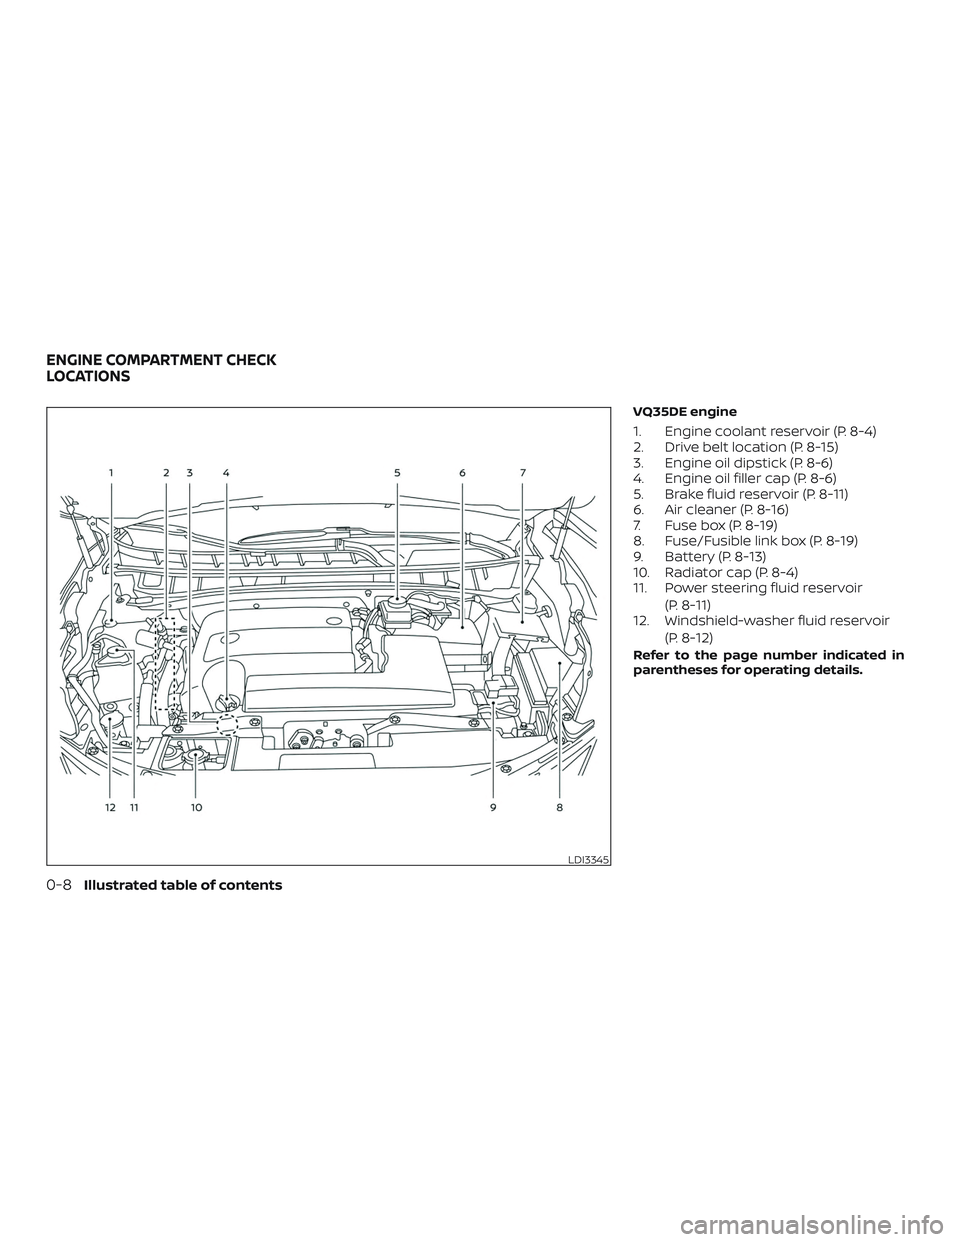 NISSAN MURANO 2019  Owner´s Manual VQ35DE engine
1. Engine coolant reservoir (P. 8-4)
2. Drive belt location (P. 8-15)
3. Engine oil dipstick (P. 8-6)
4. Engine oil filler cap (P. 8-6)
5. Brake fluid reservoir (P. 8-11)
6. Air cleaner 